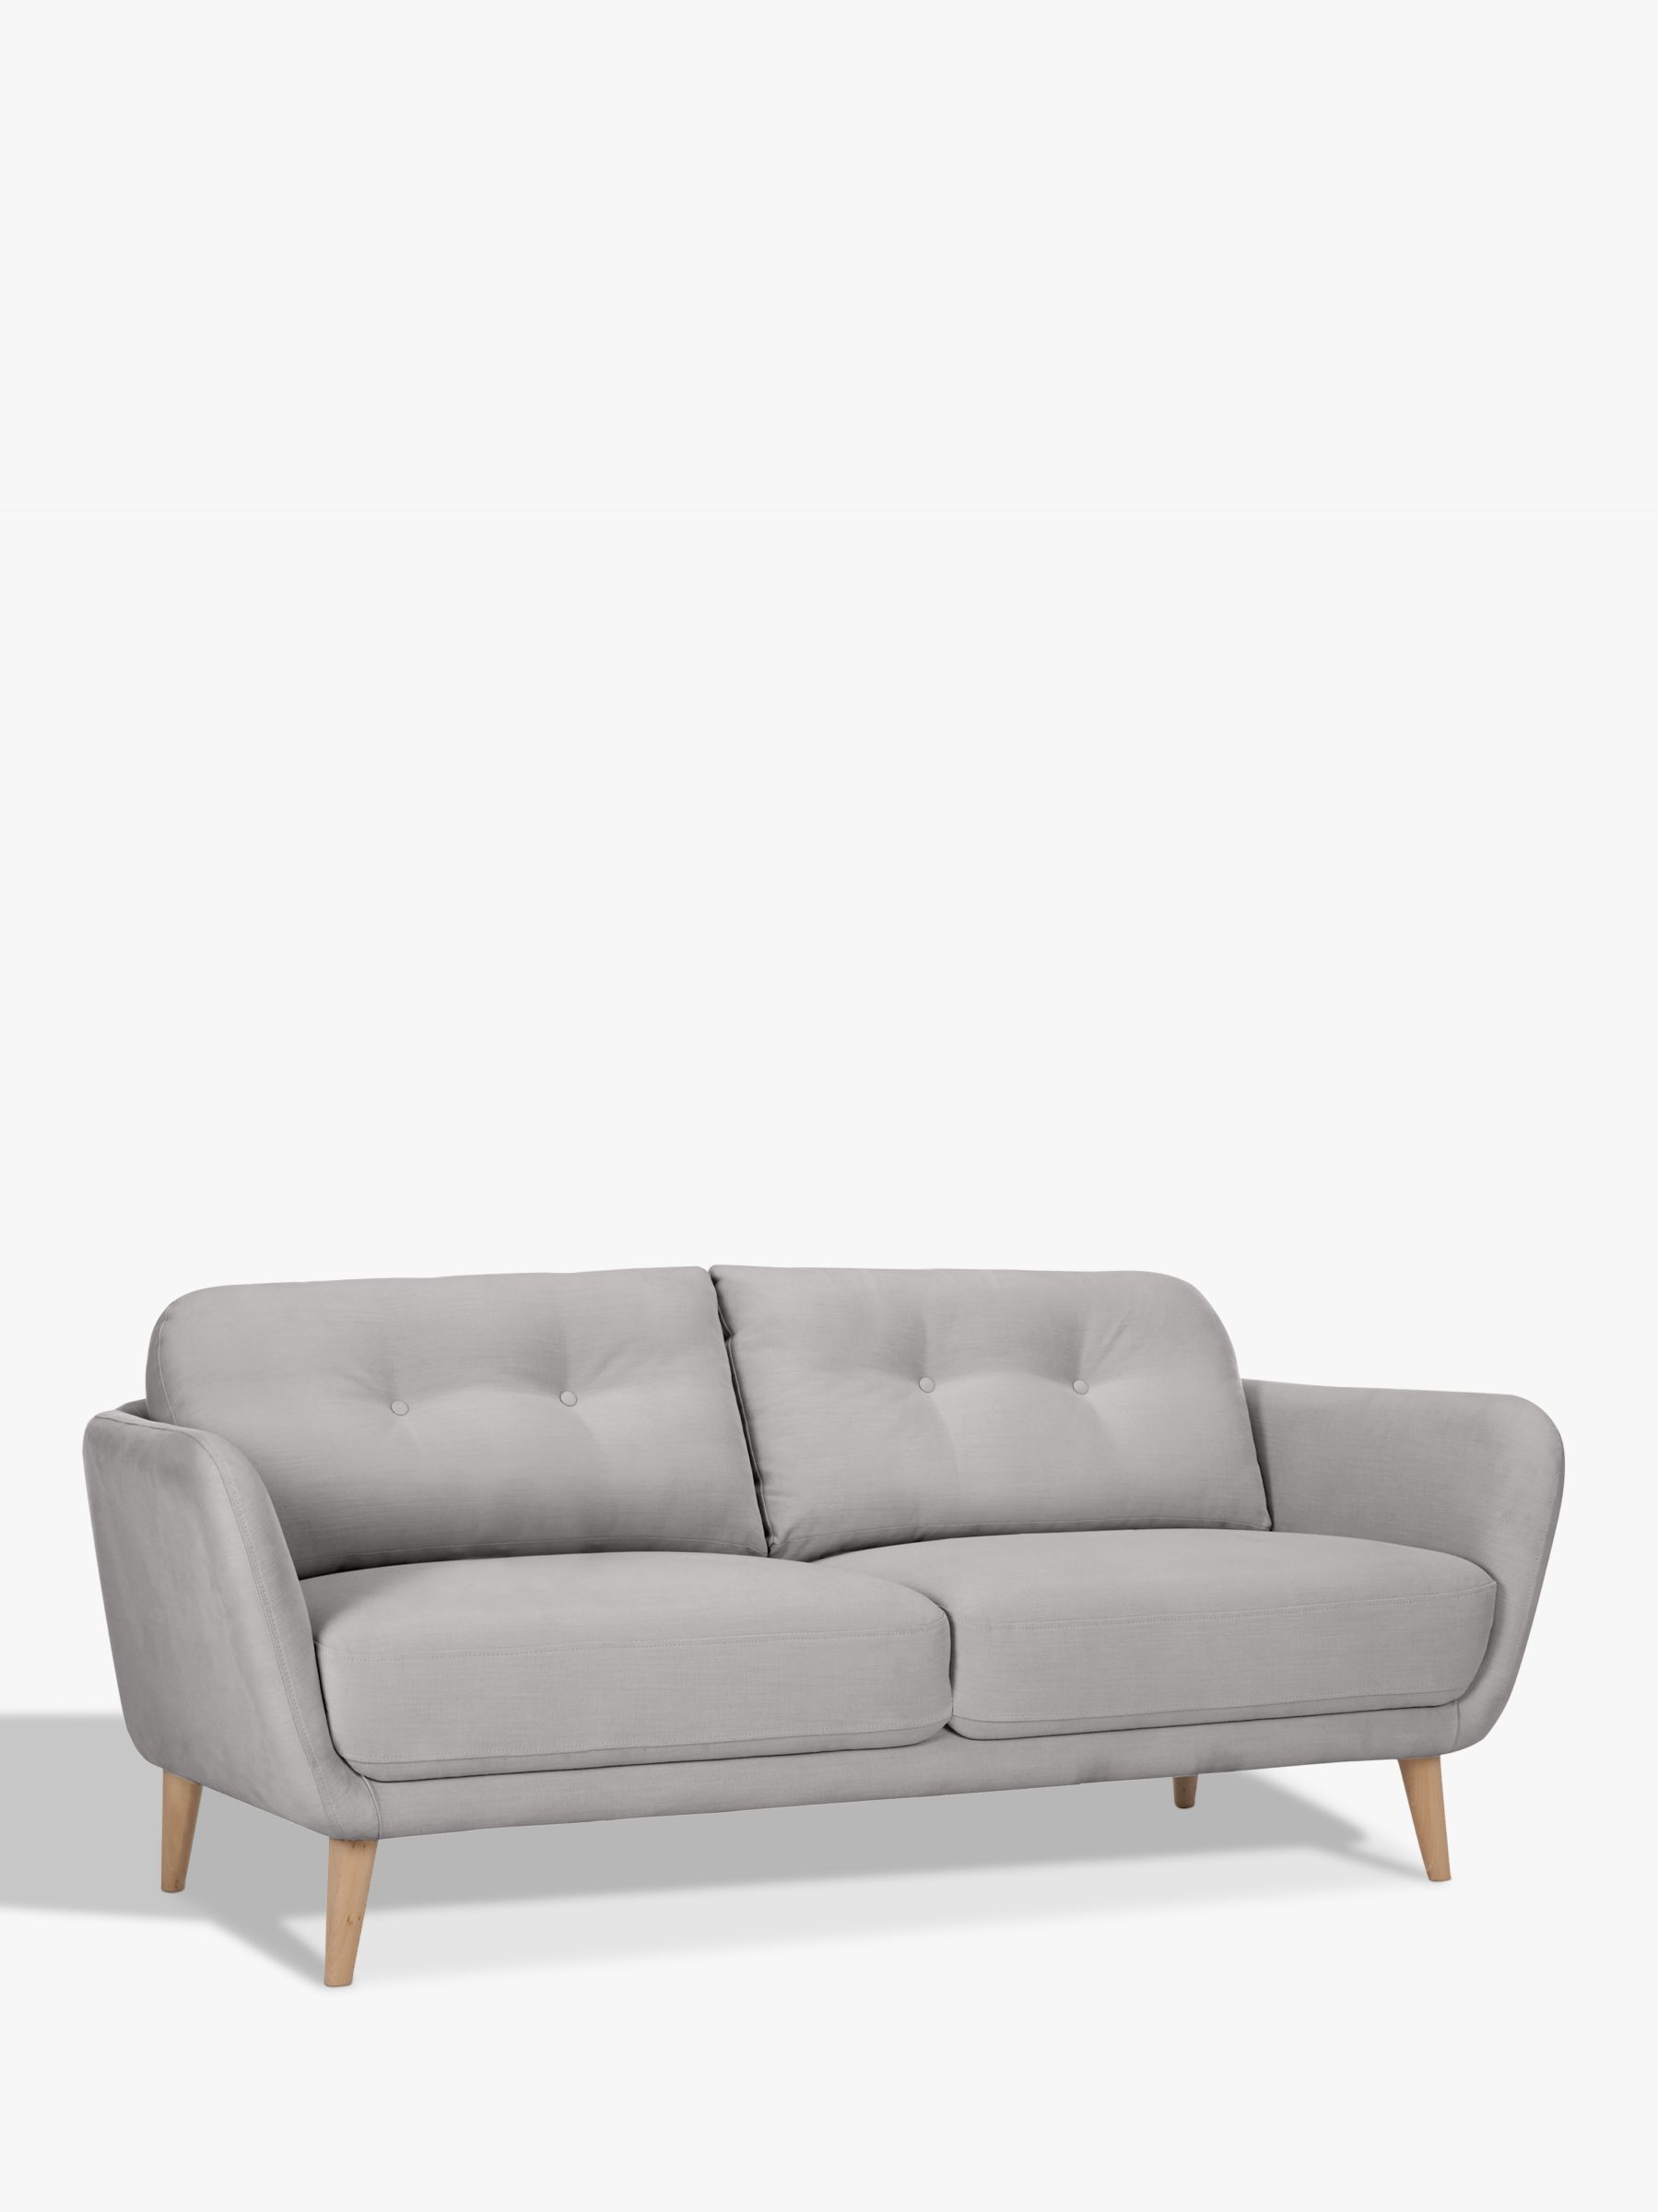 Arlo Range, John Lewis Arlo Medium 2 Seater Sofa, Light Leg, Relaxed Linen Storm